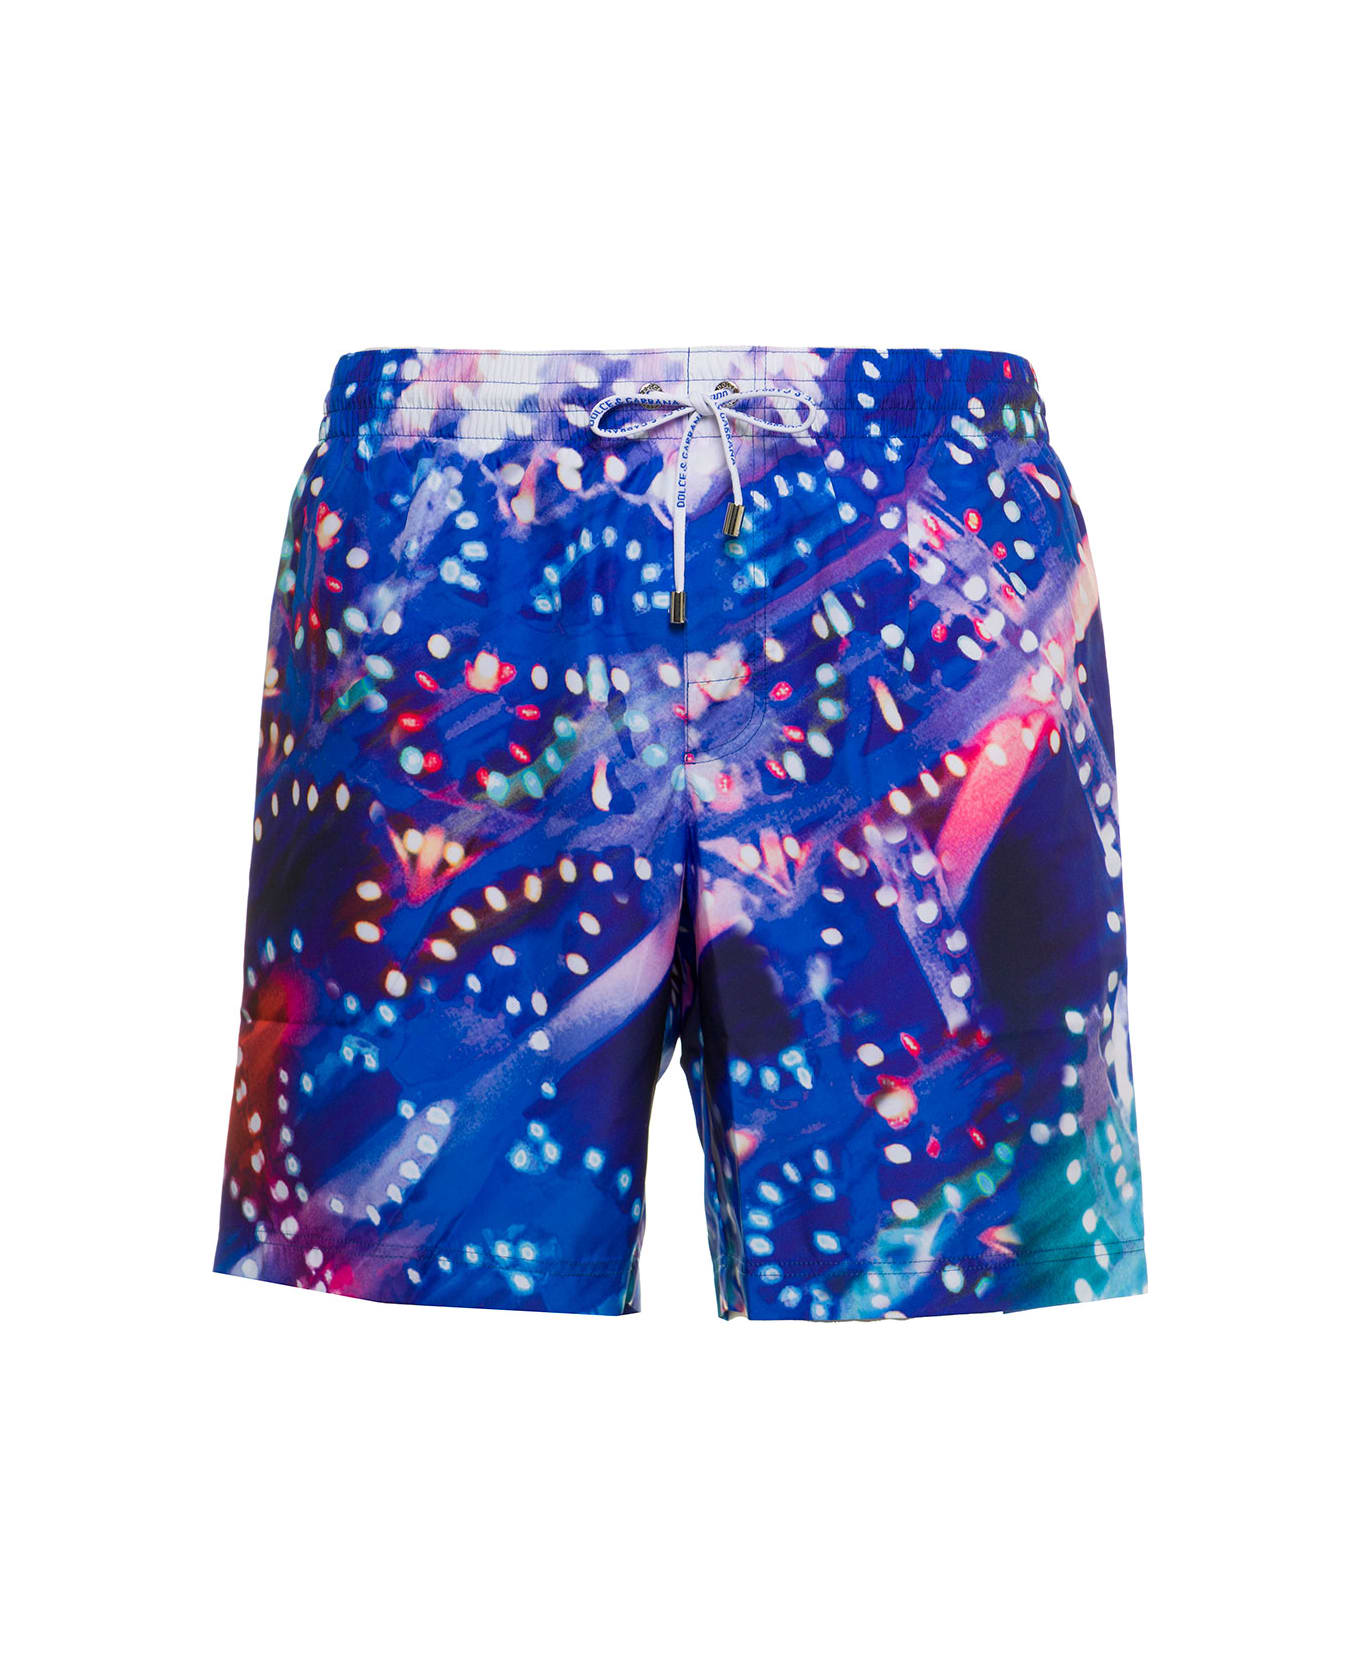 Dolce & Gabbana Man's Nylon Luminarie Printed Swim Shorts - MULTICOLOR スイムトランクス